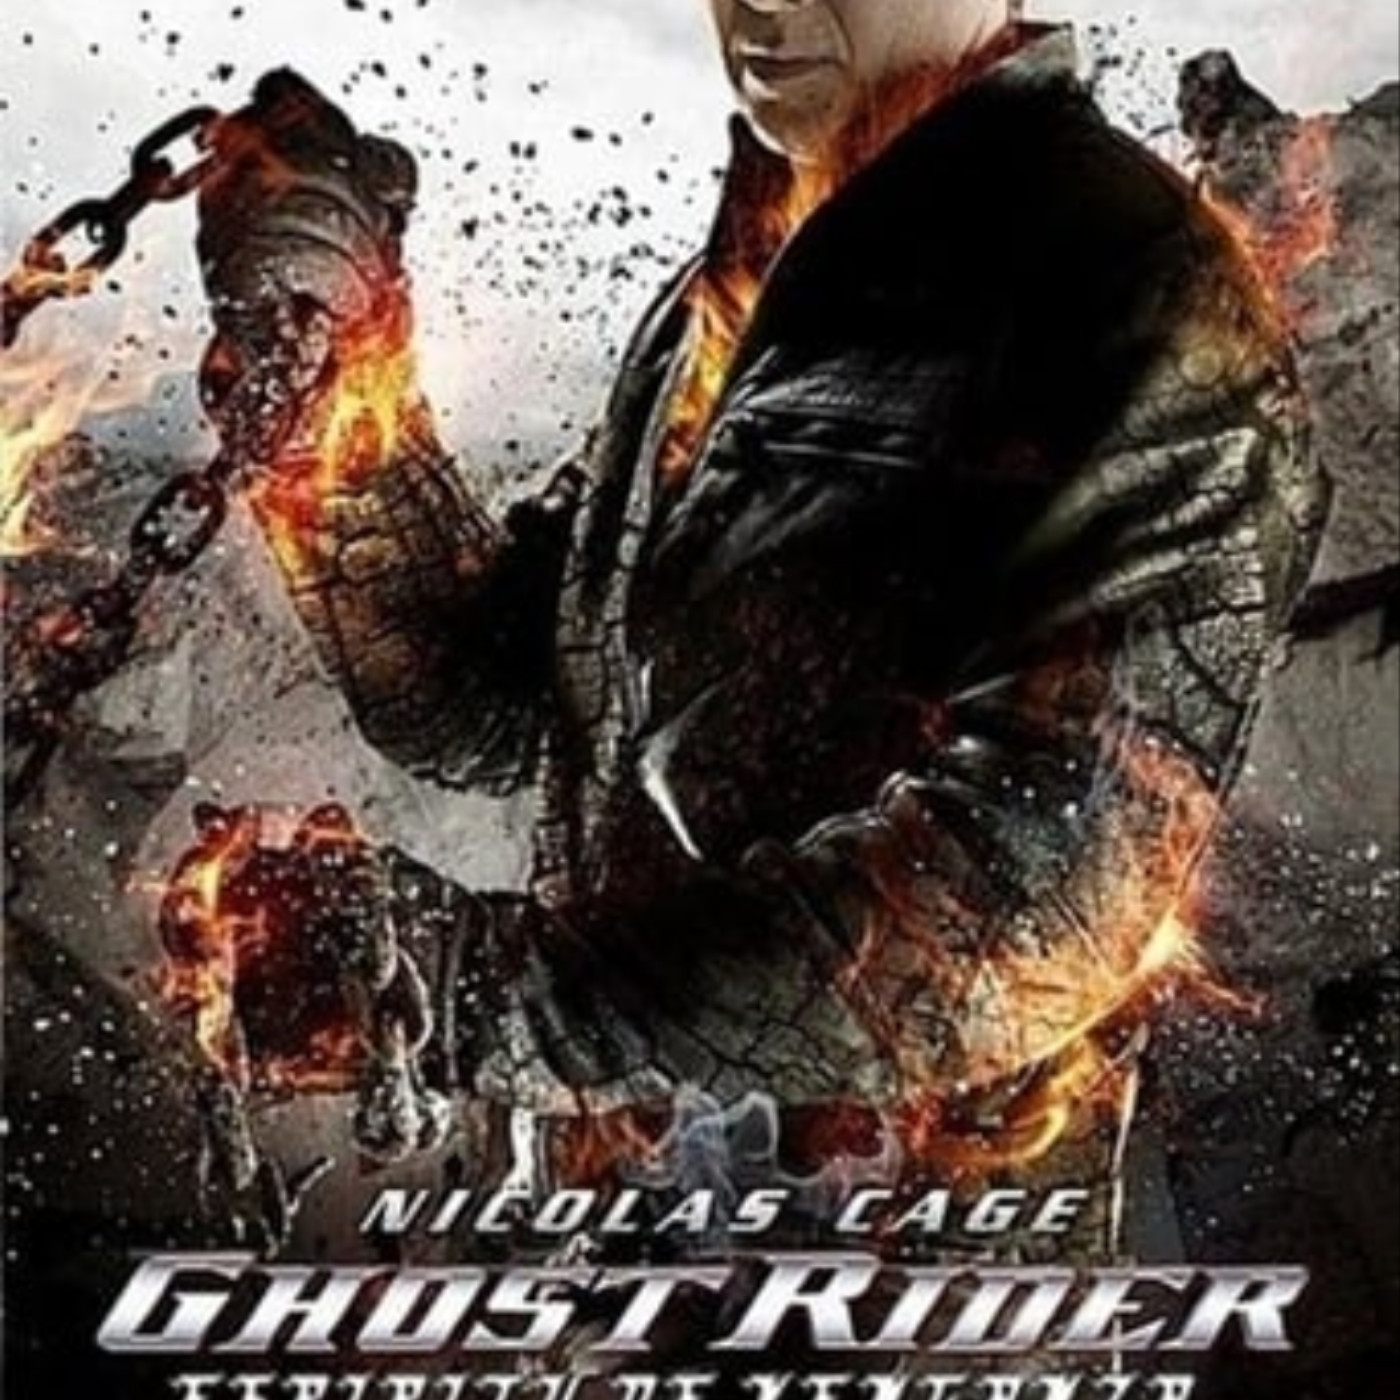 FULLHD] Ghost Rider: Espíritu de venganza pelicula completa en español  gratis Gnula | Podcast on SoundOn